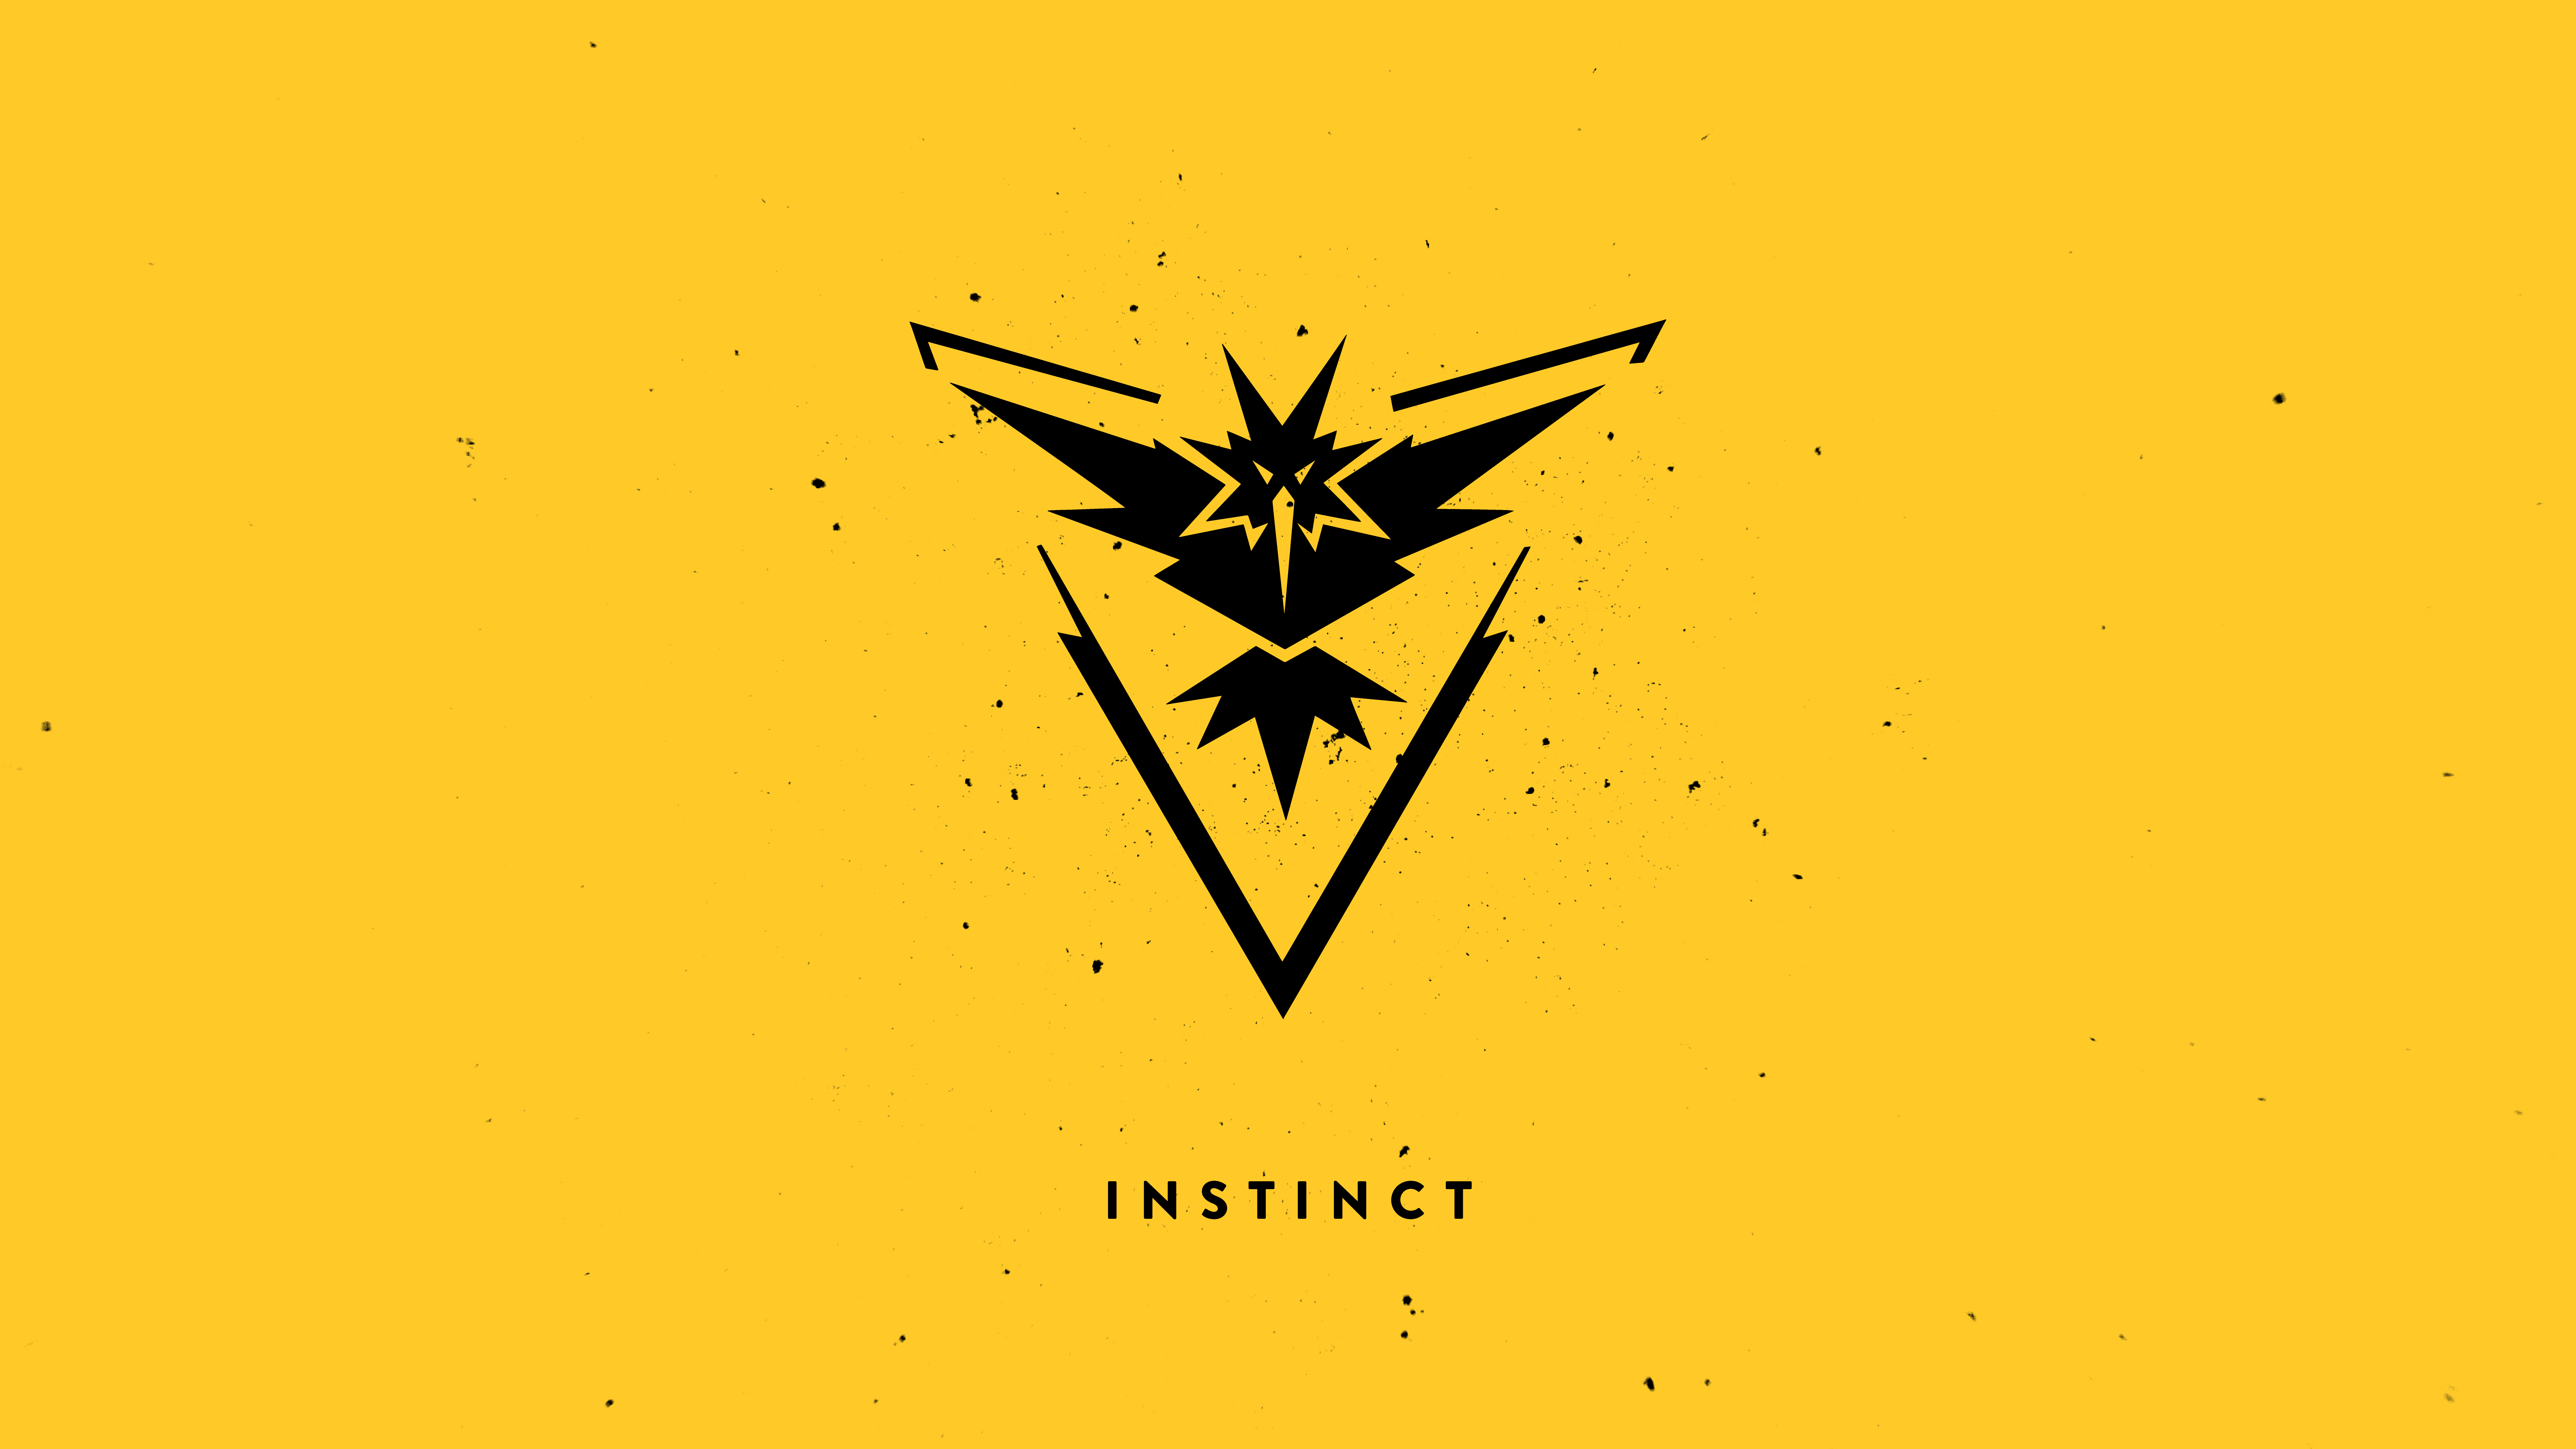 Team Instinct Wallpaper